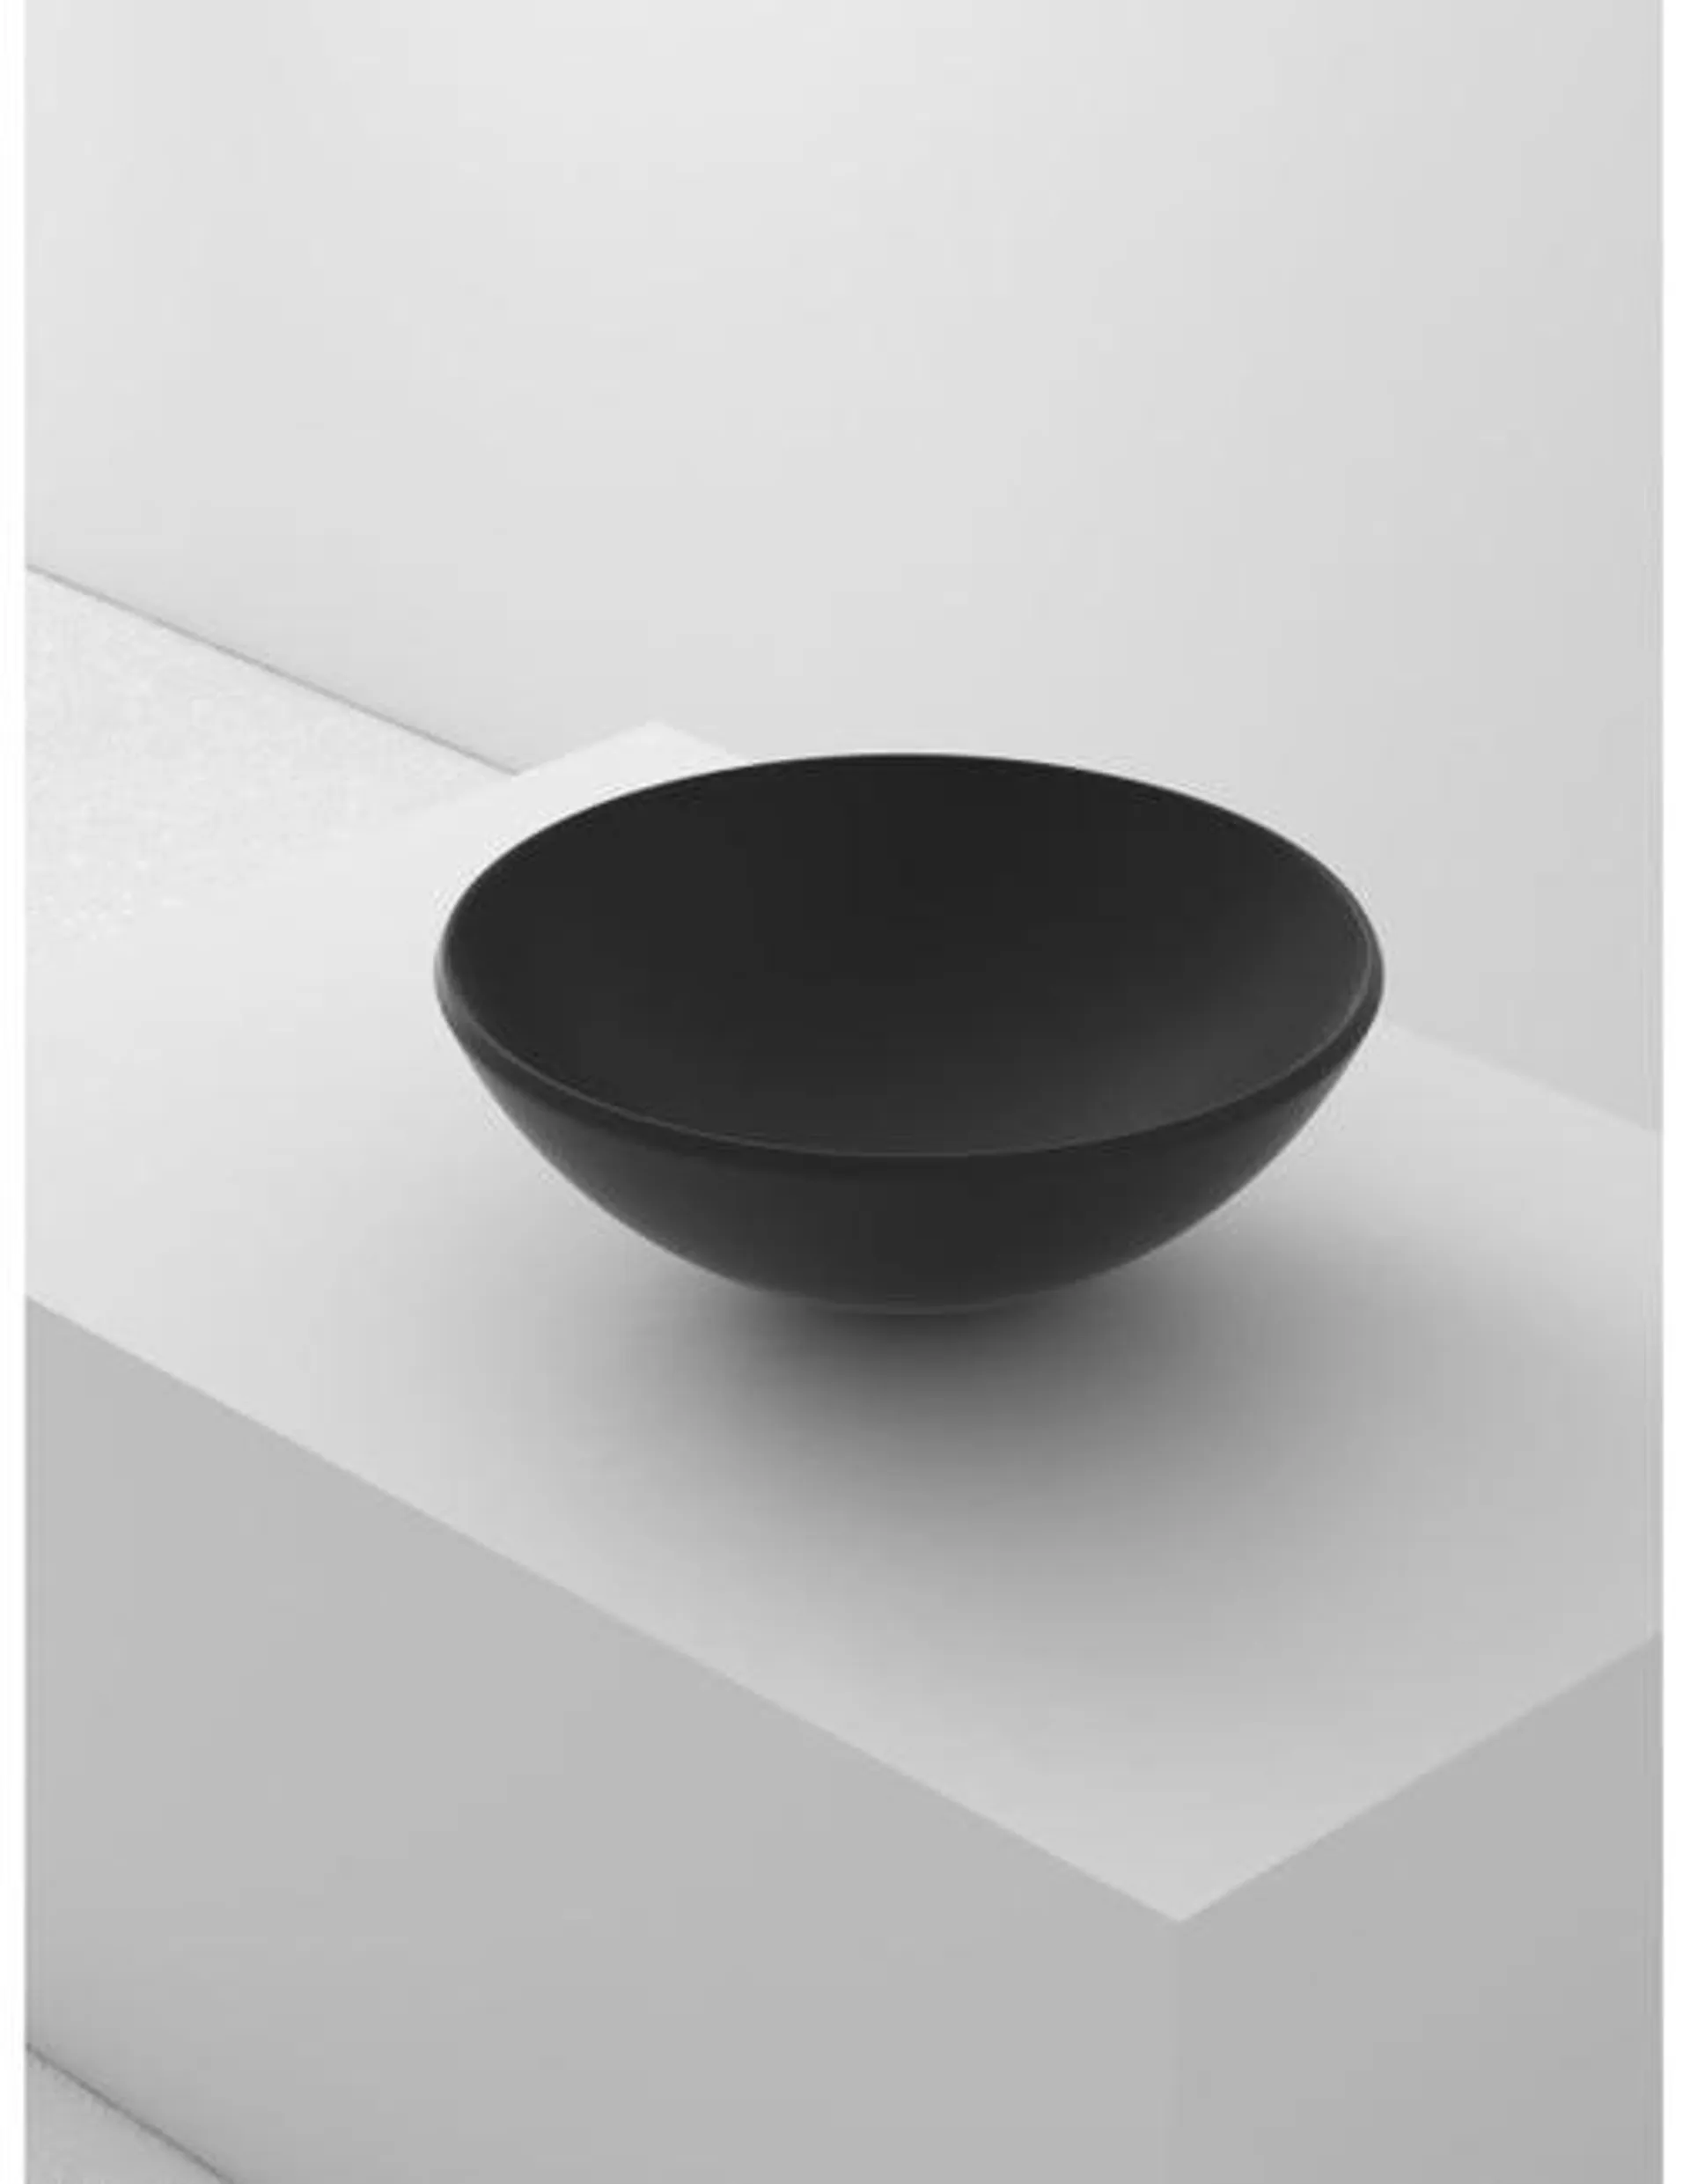 Lavabo Sobre Encimera - Cristal - Forma Circular - 38 x 38 x 14 cm - Color Negro Mate SCRBOL 2.0 Ver detalles del producto